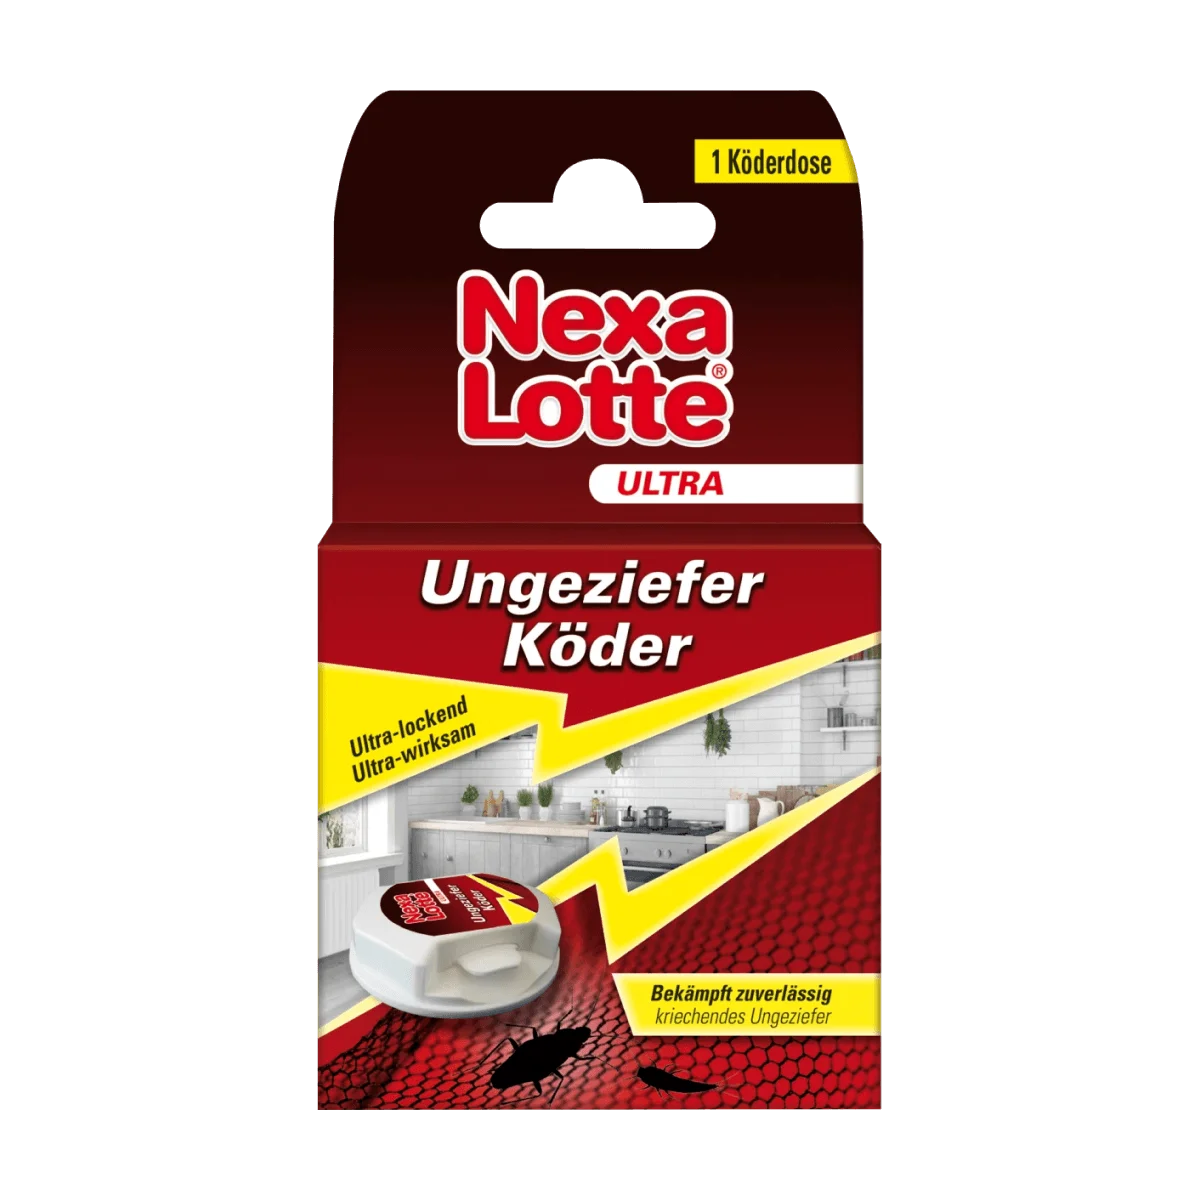 Nexa Lotte Ungeziefer Köder Ultra, 1 Stk